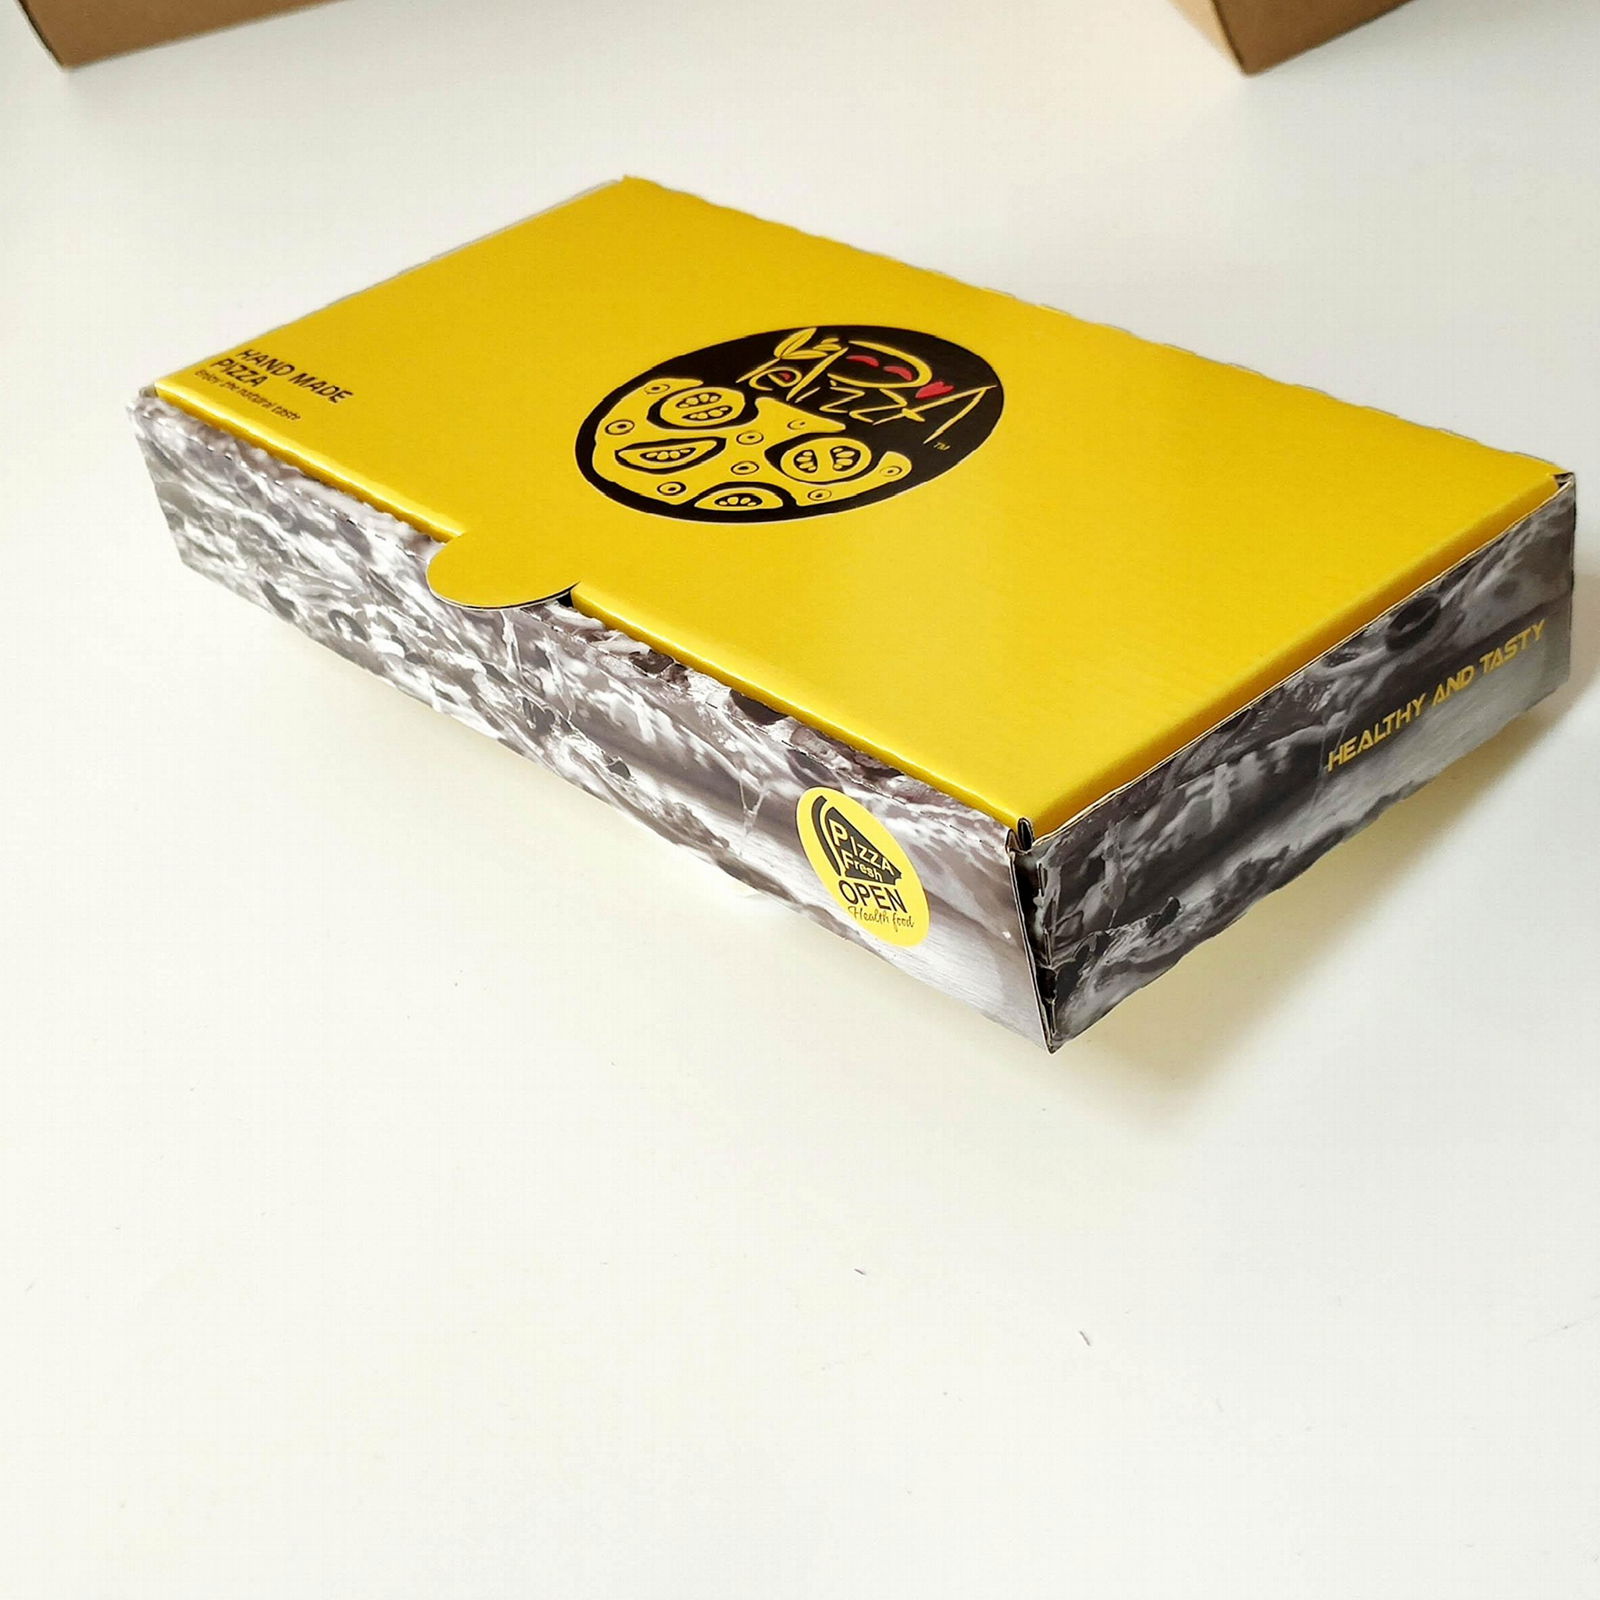 Ectangle pizza box 5